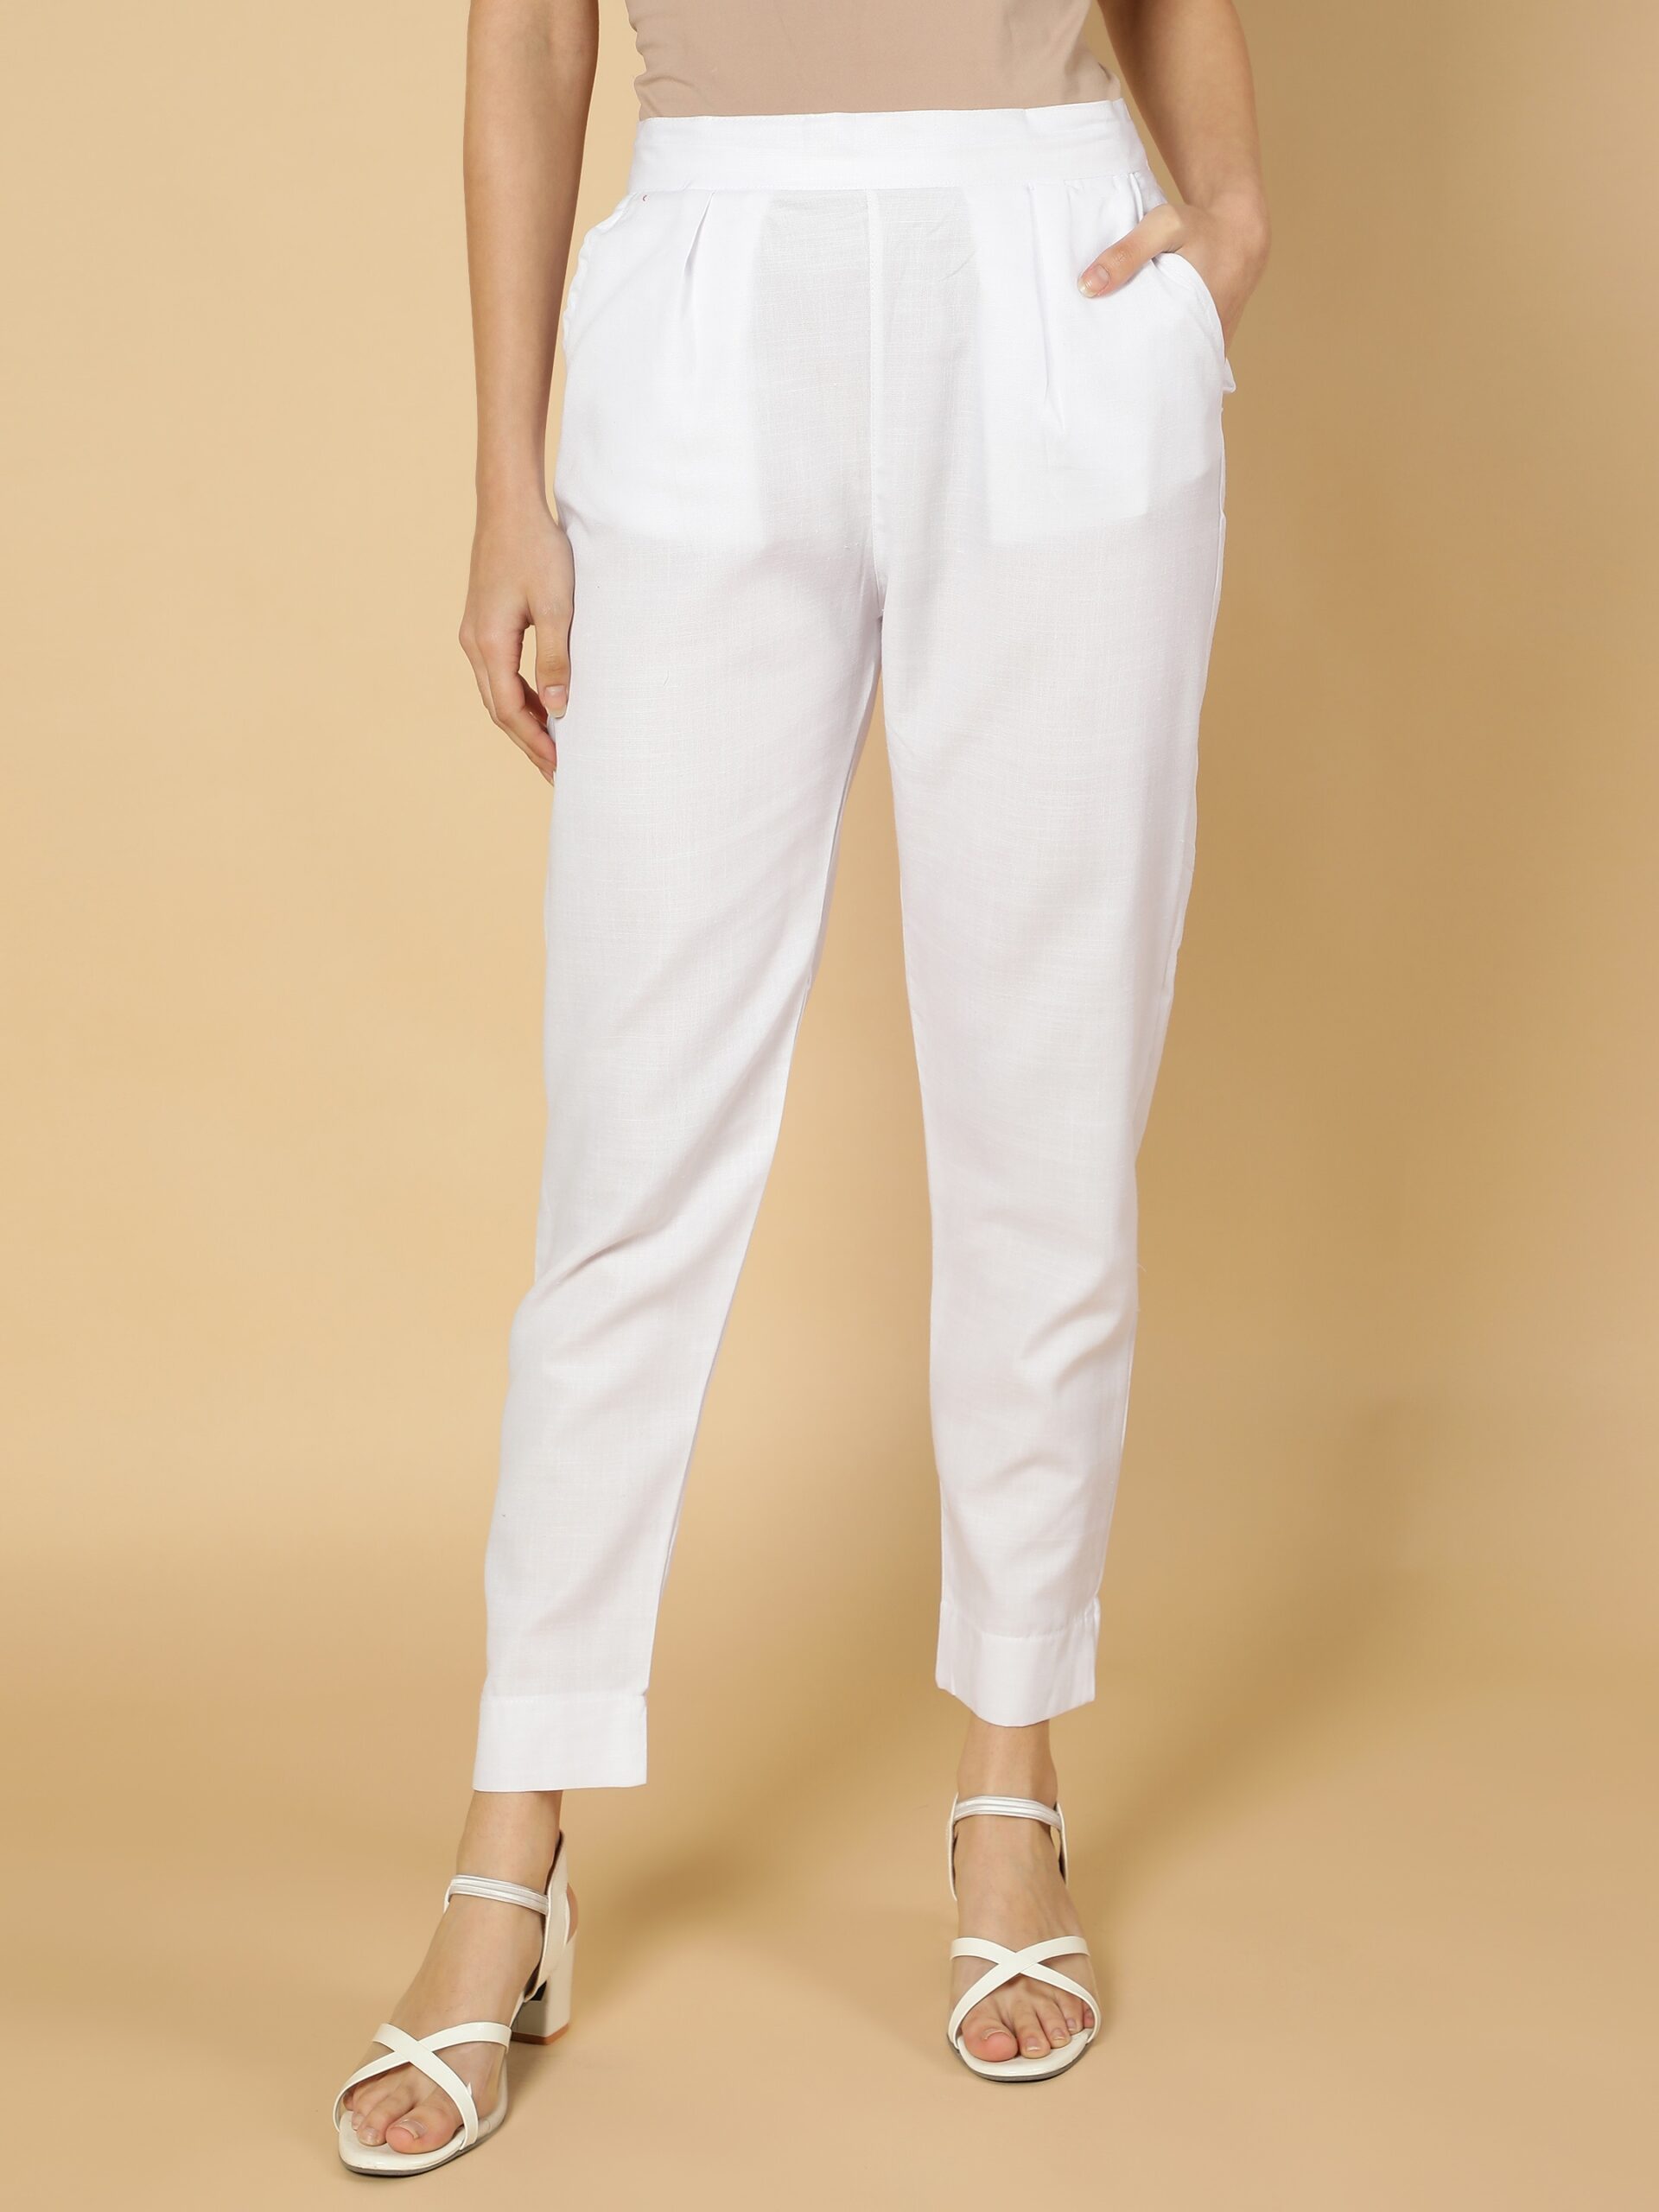 Women's White Trousers | M&S-saigonsouth.com.vn